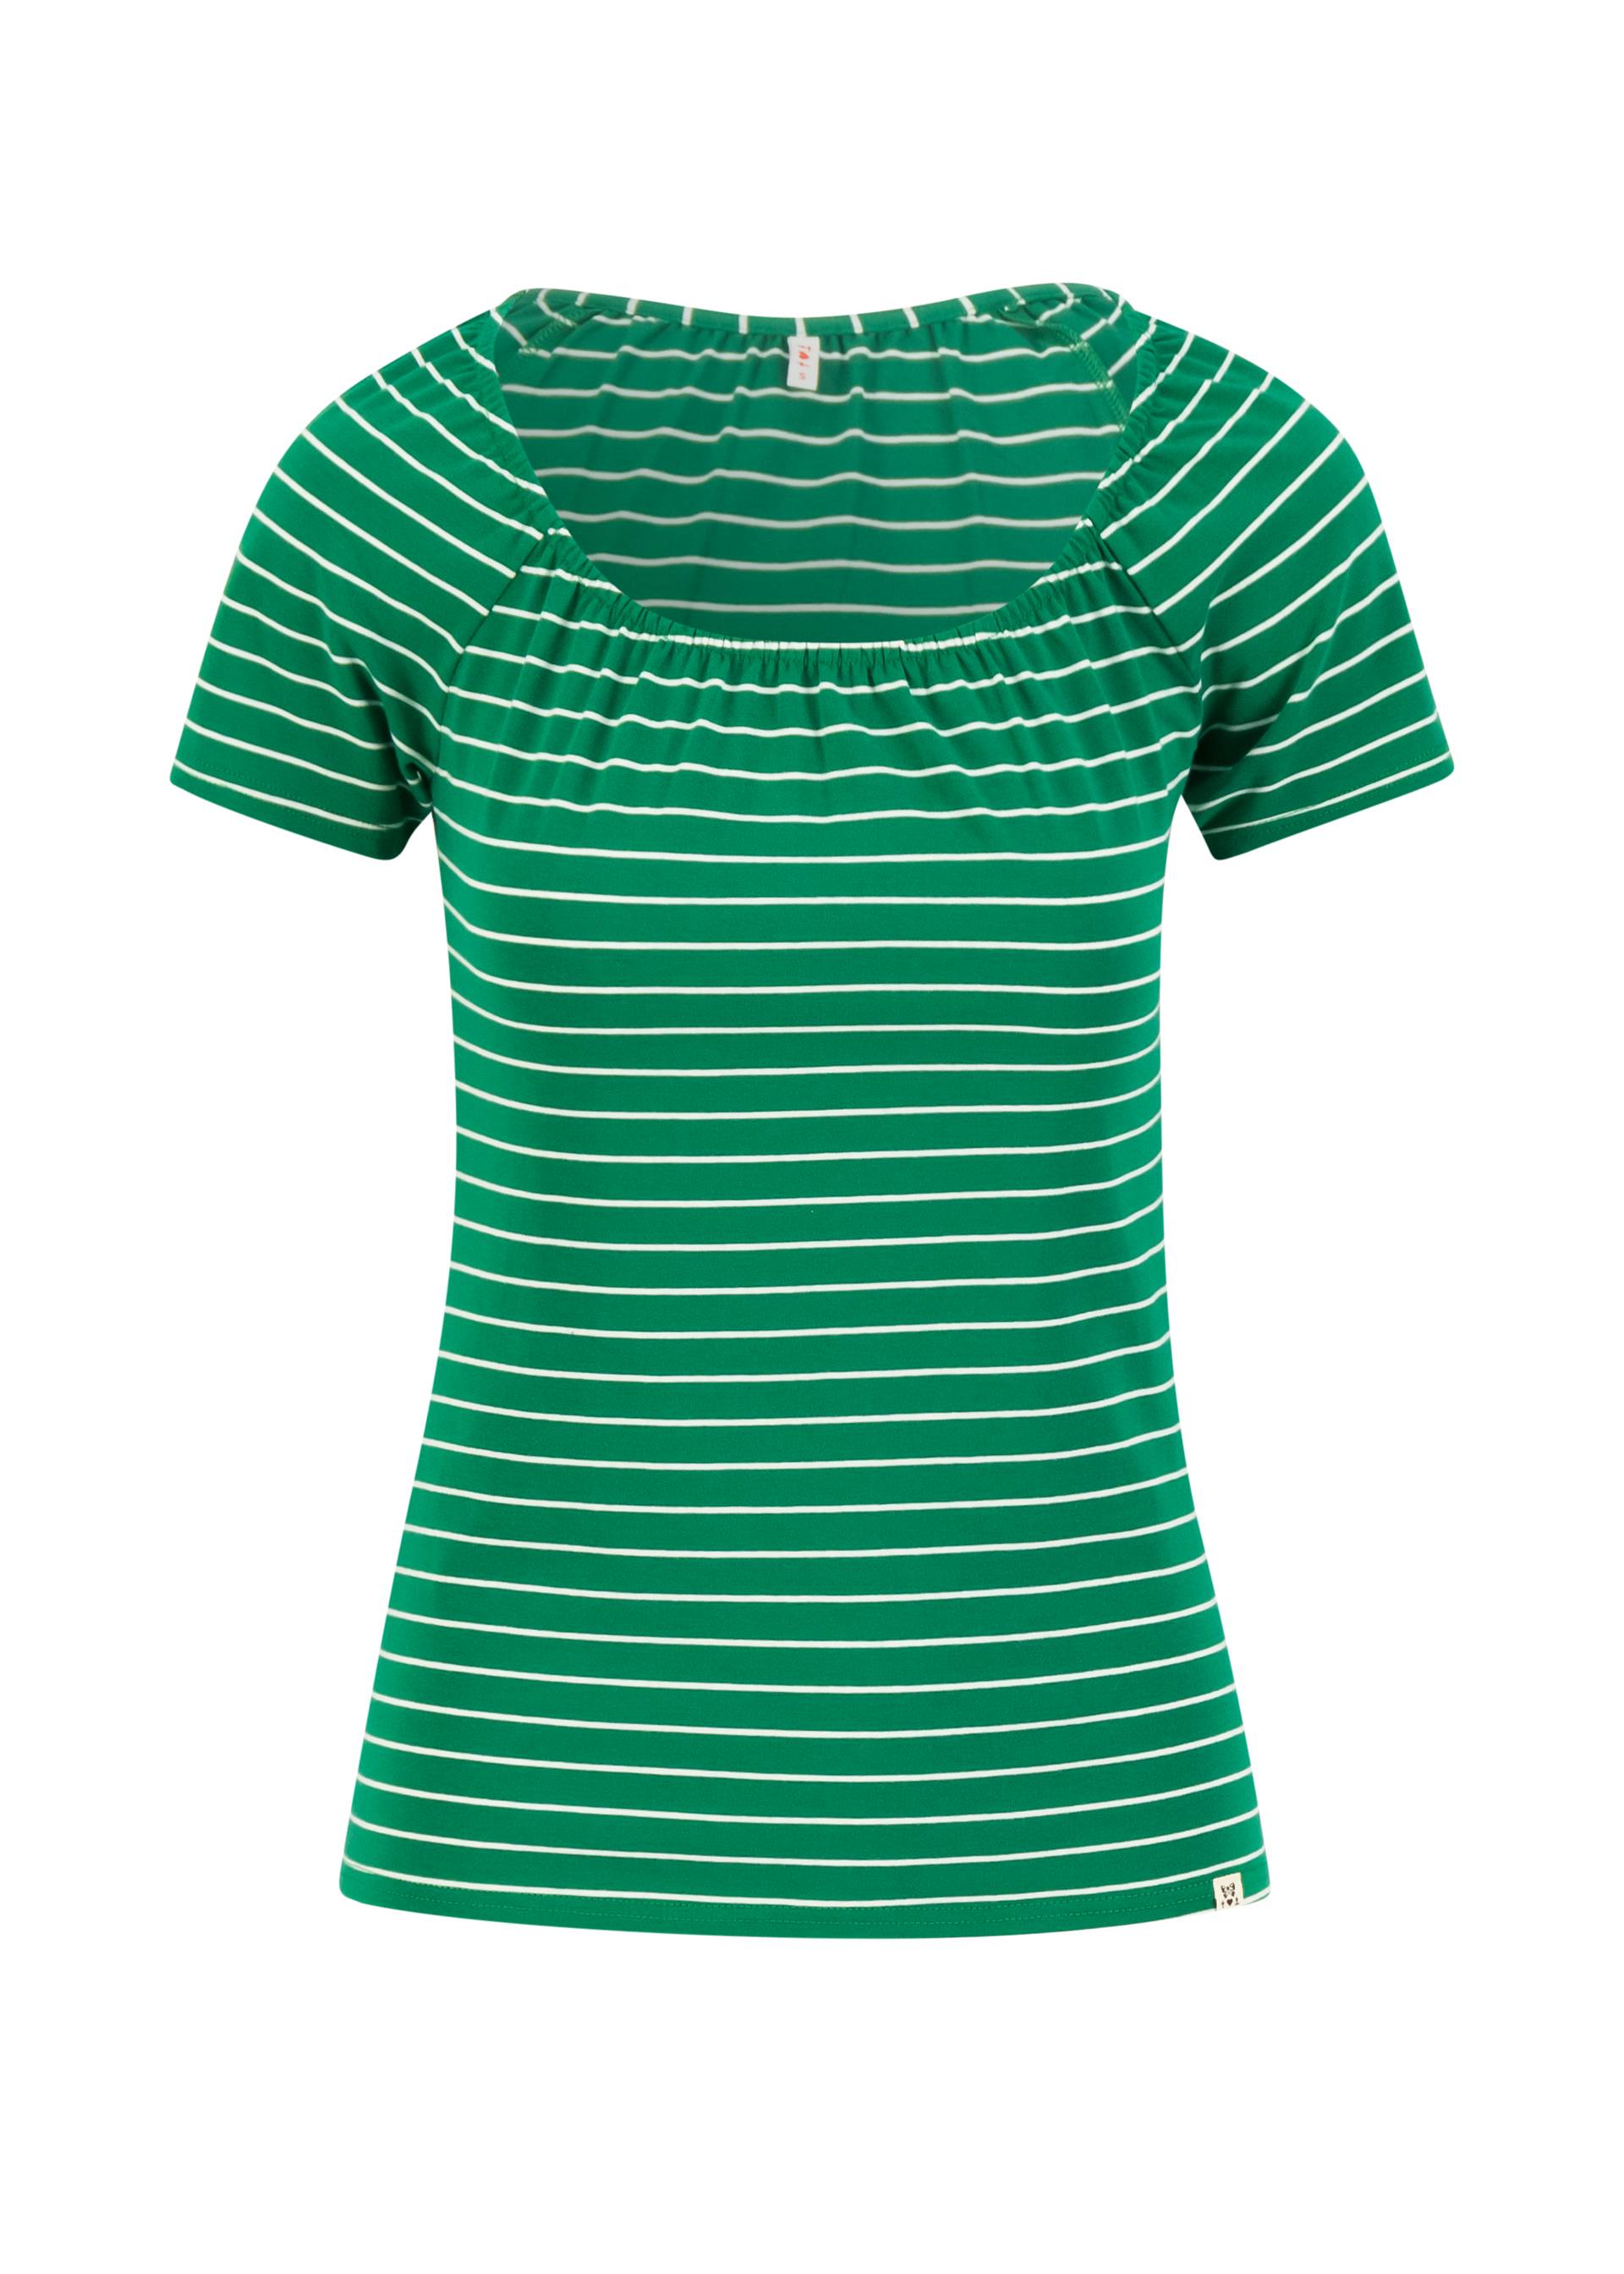 T-Shirt Vintage Heart, sports club stripes, Tops, Green